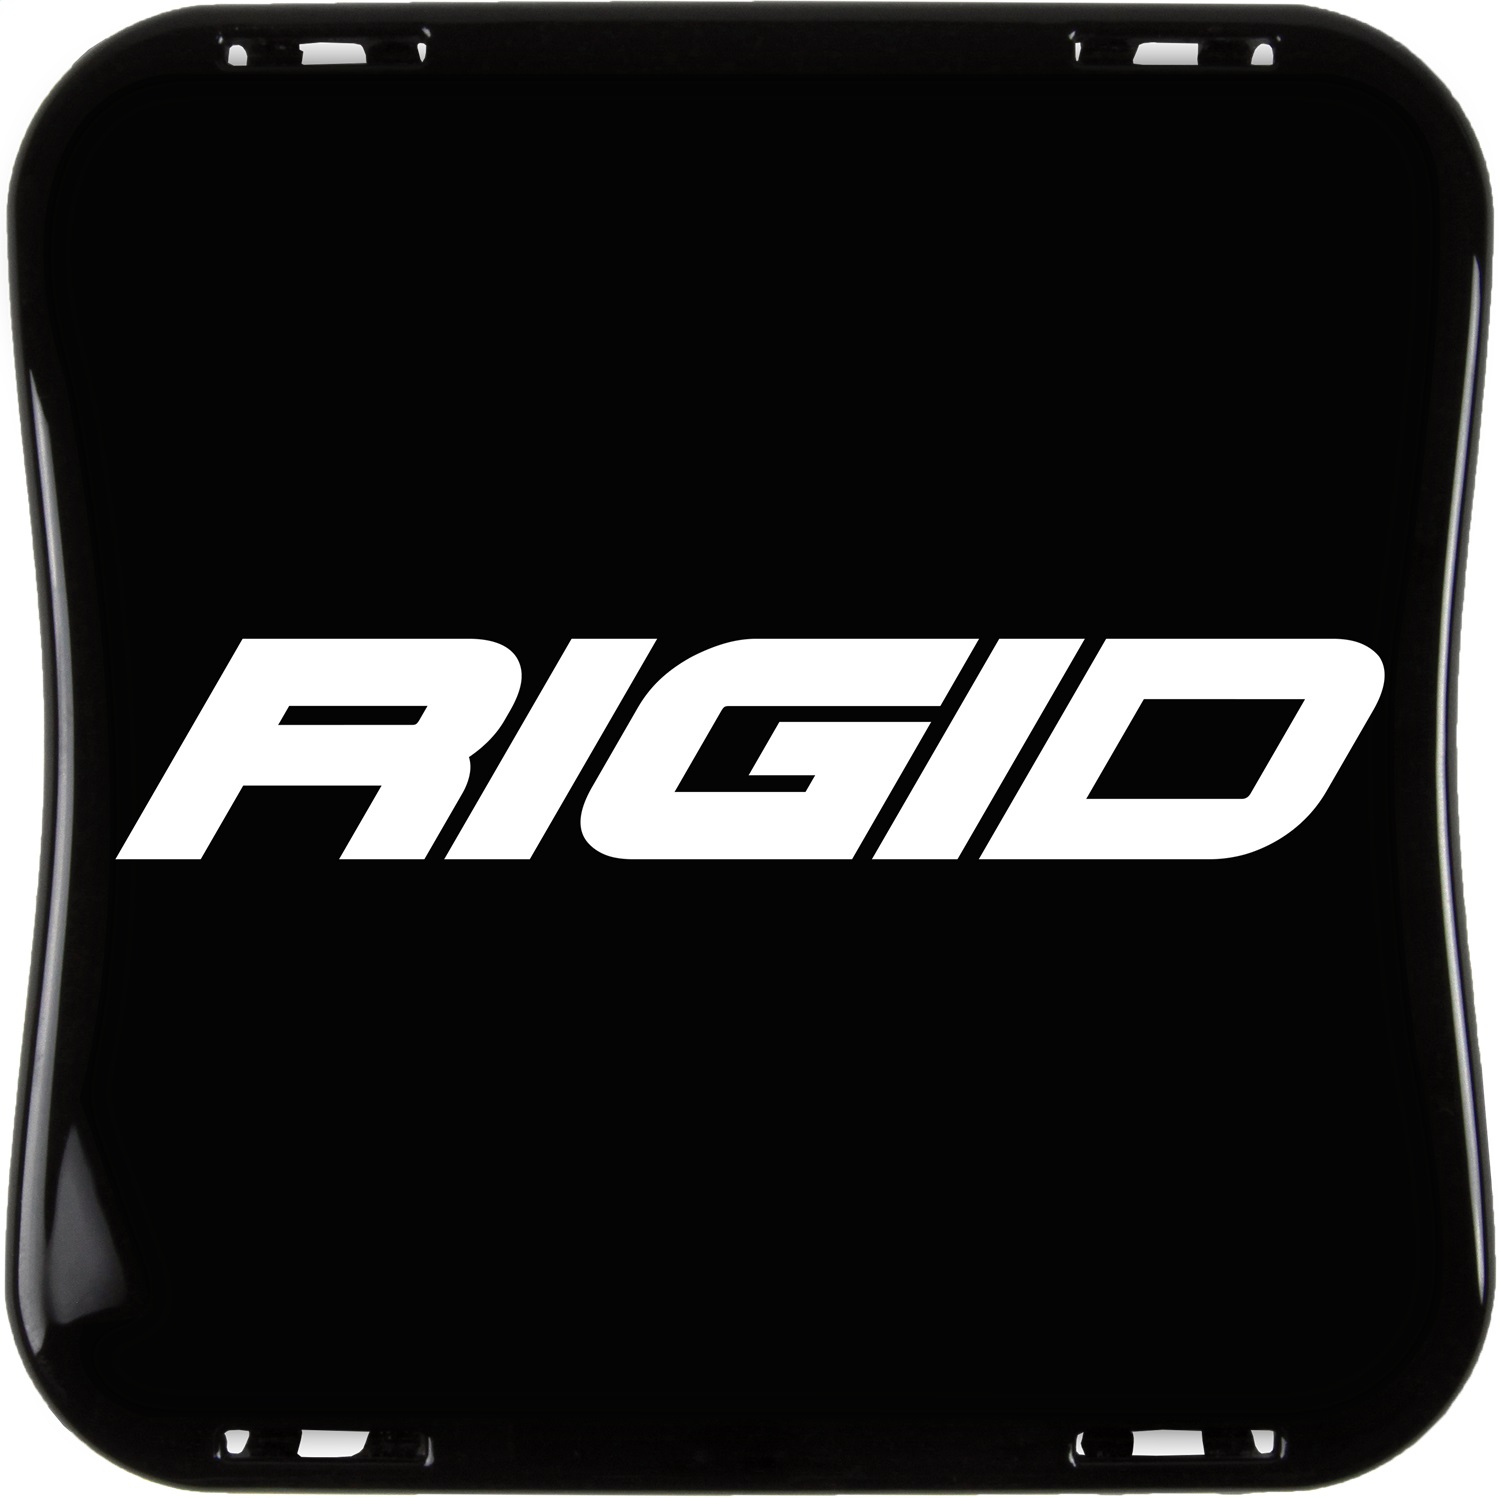 RIGID Industries 321913 RIGID Light Cover For D-XL Series LED Lights, Black, Single